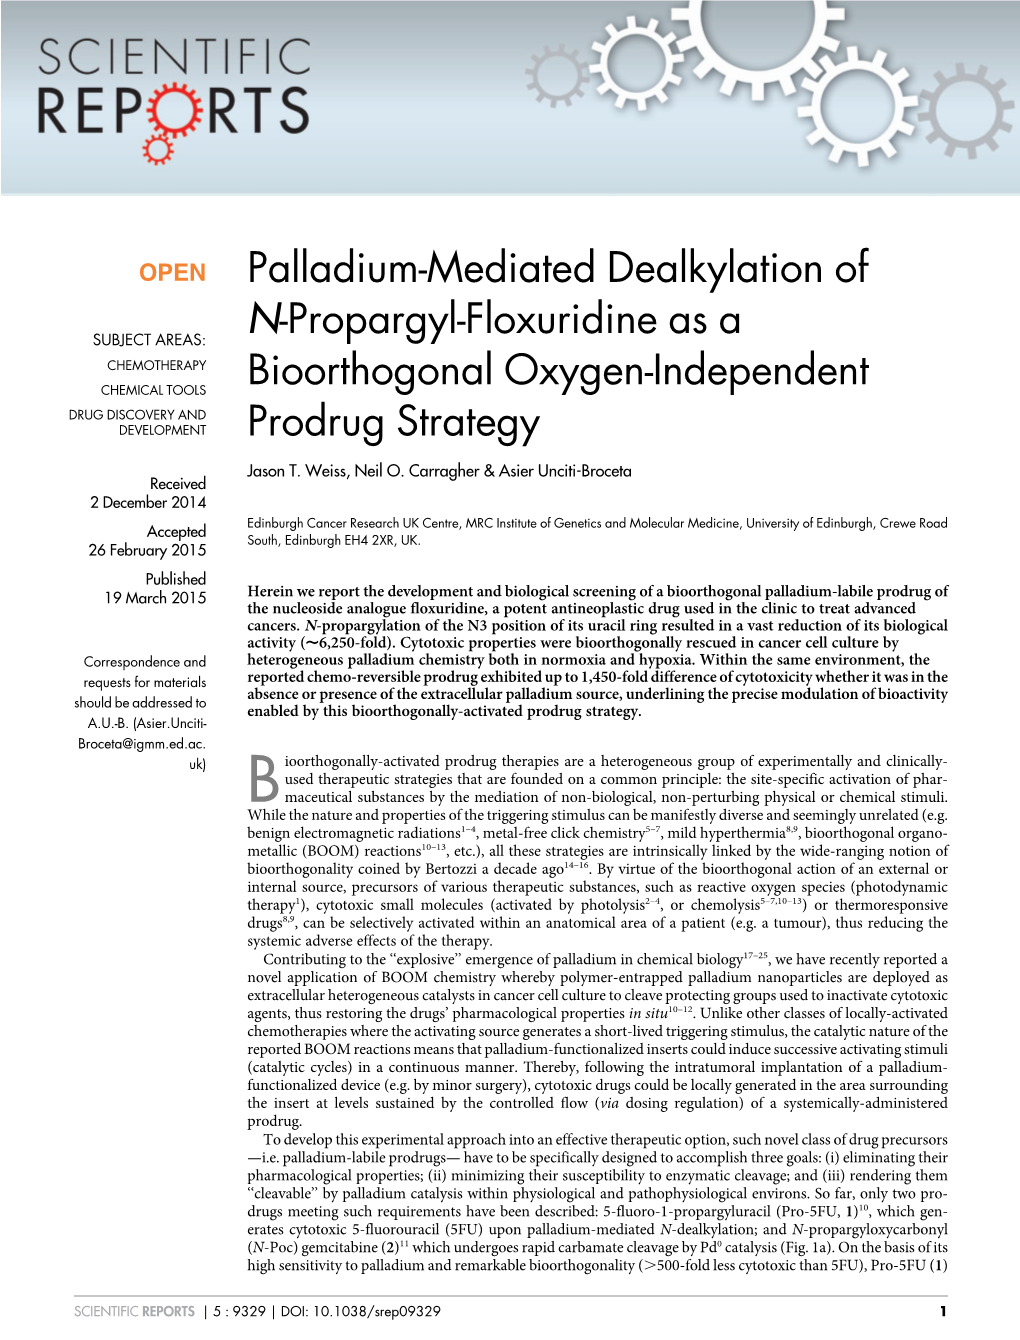 Palladium-Mediated Dealkylation of N-Propargyl-Floxuridine As a Bioorthogonal Oxygen-Independent Prodrug Strategy